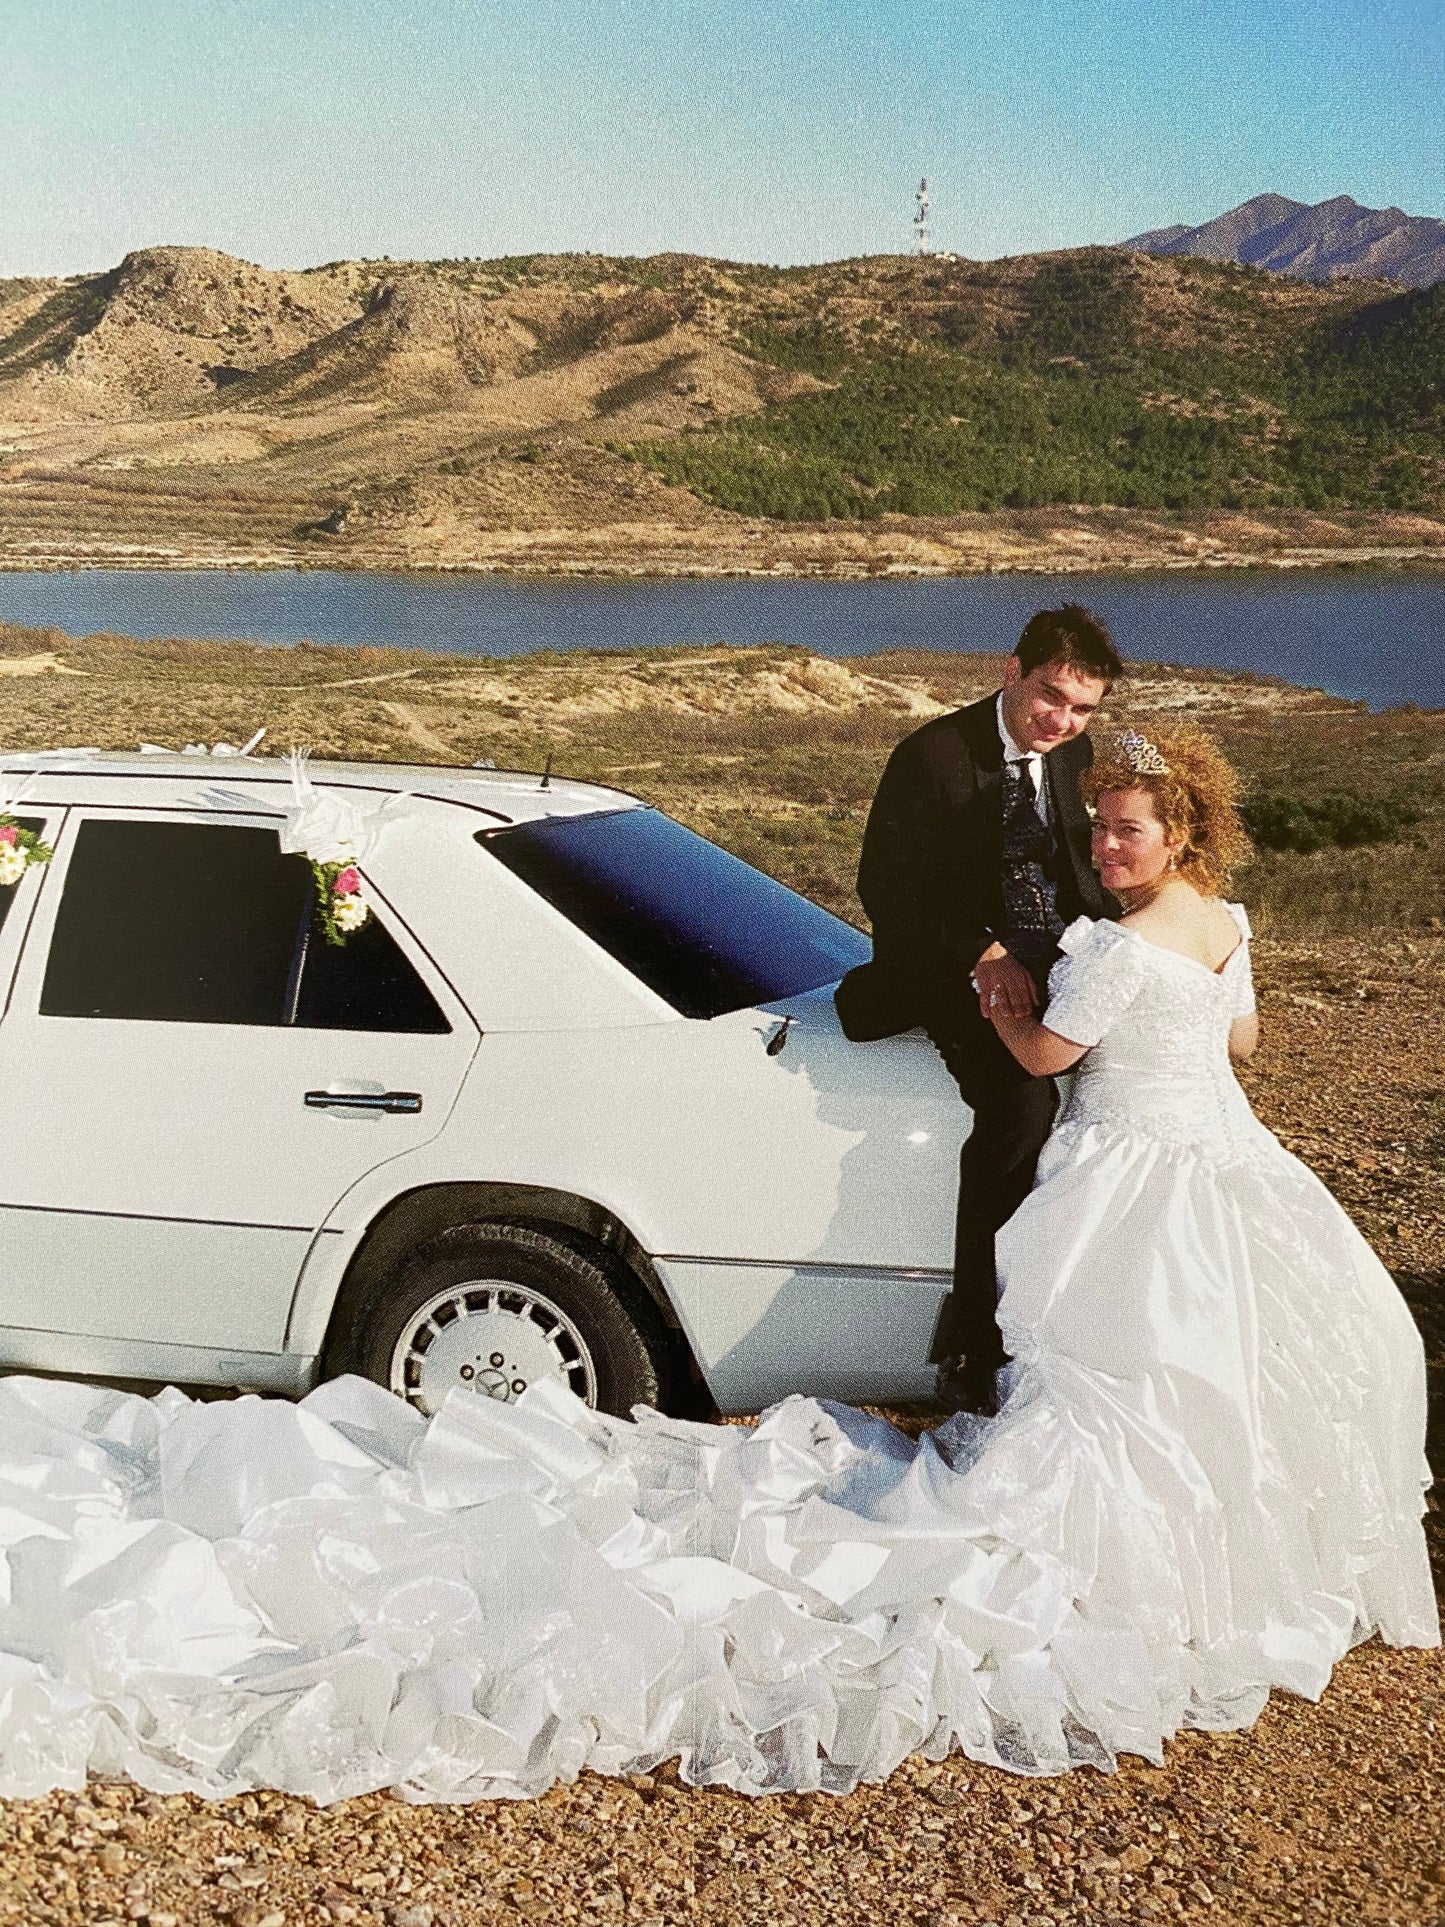 Bodas/Weddings 1979-1999 (1999)